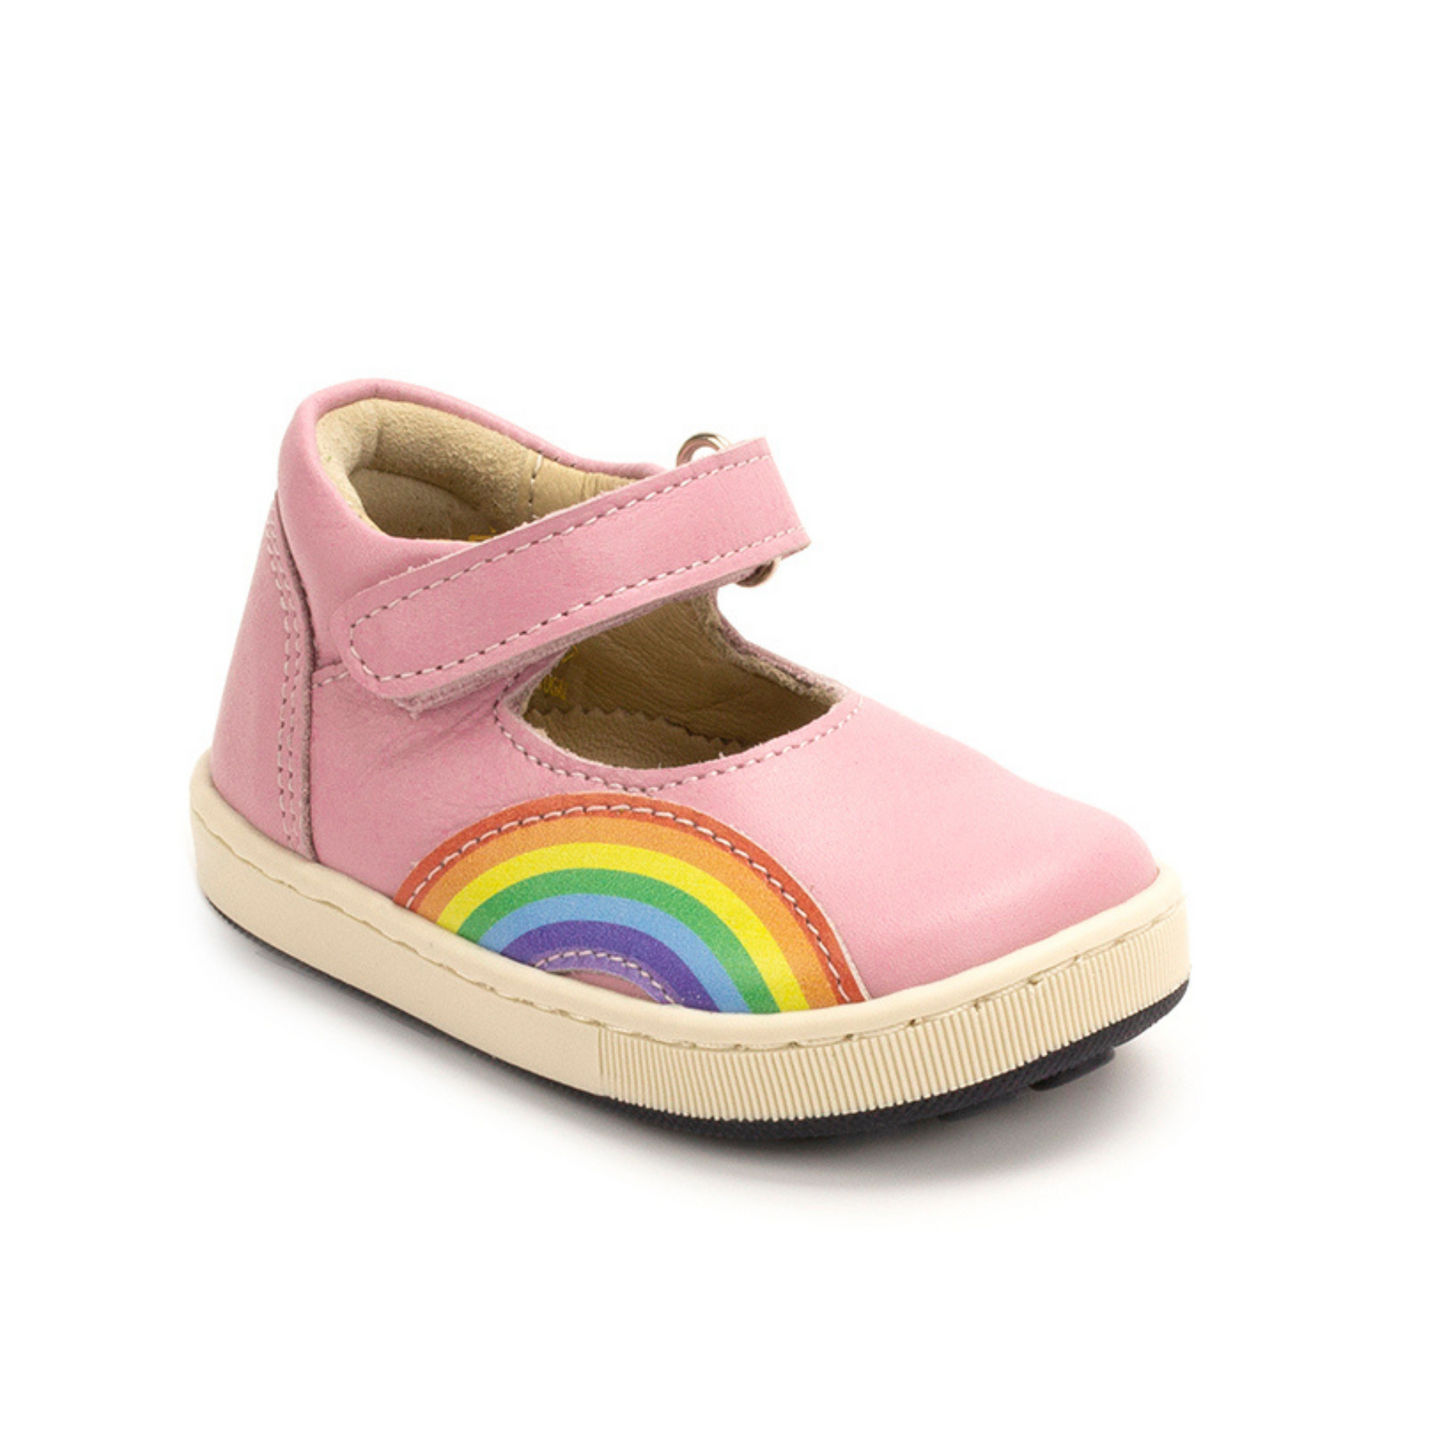 Pink Rainbow Infant Shoe